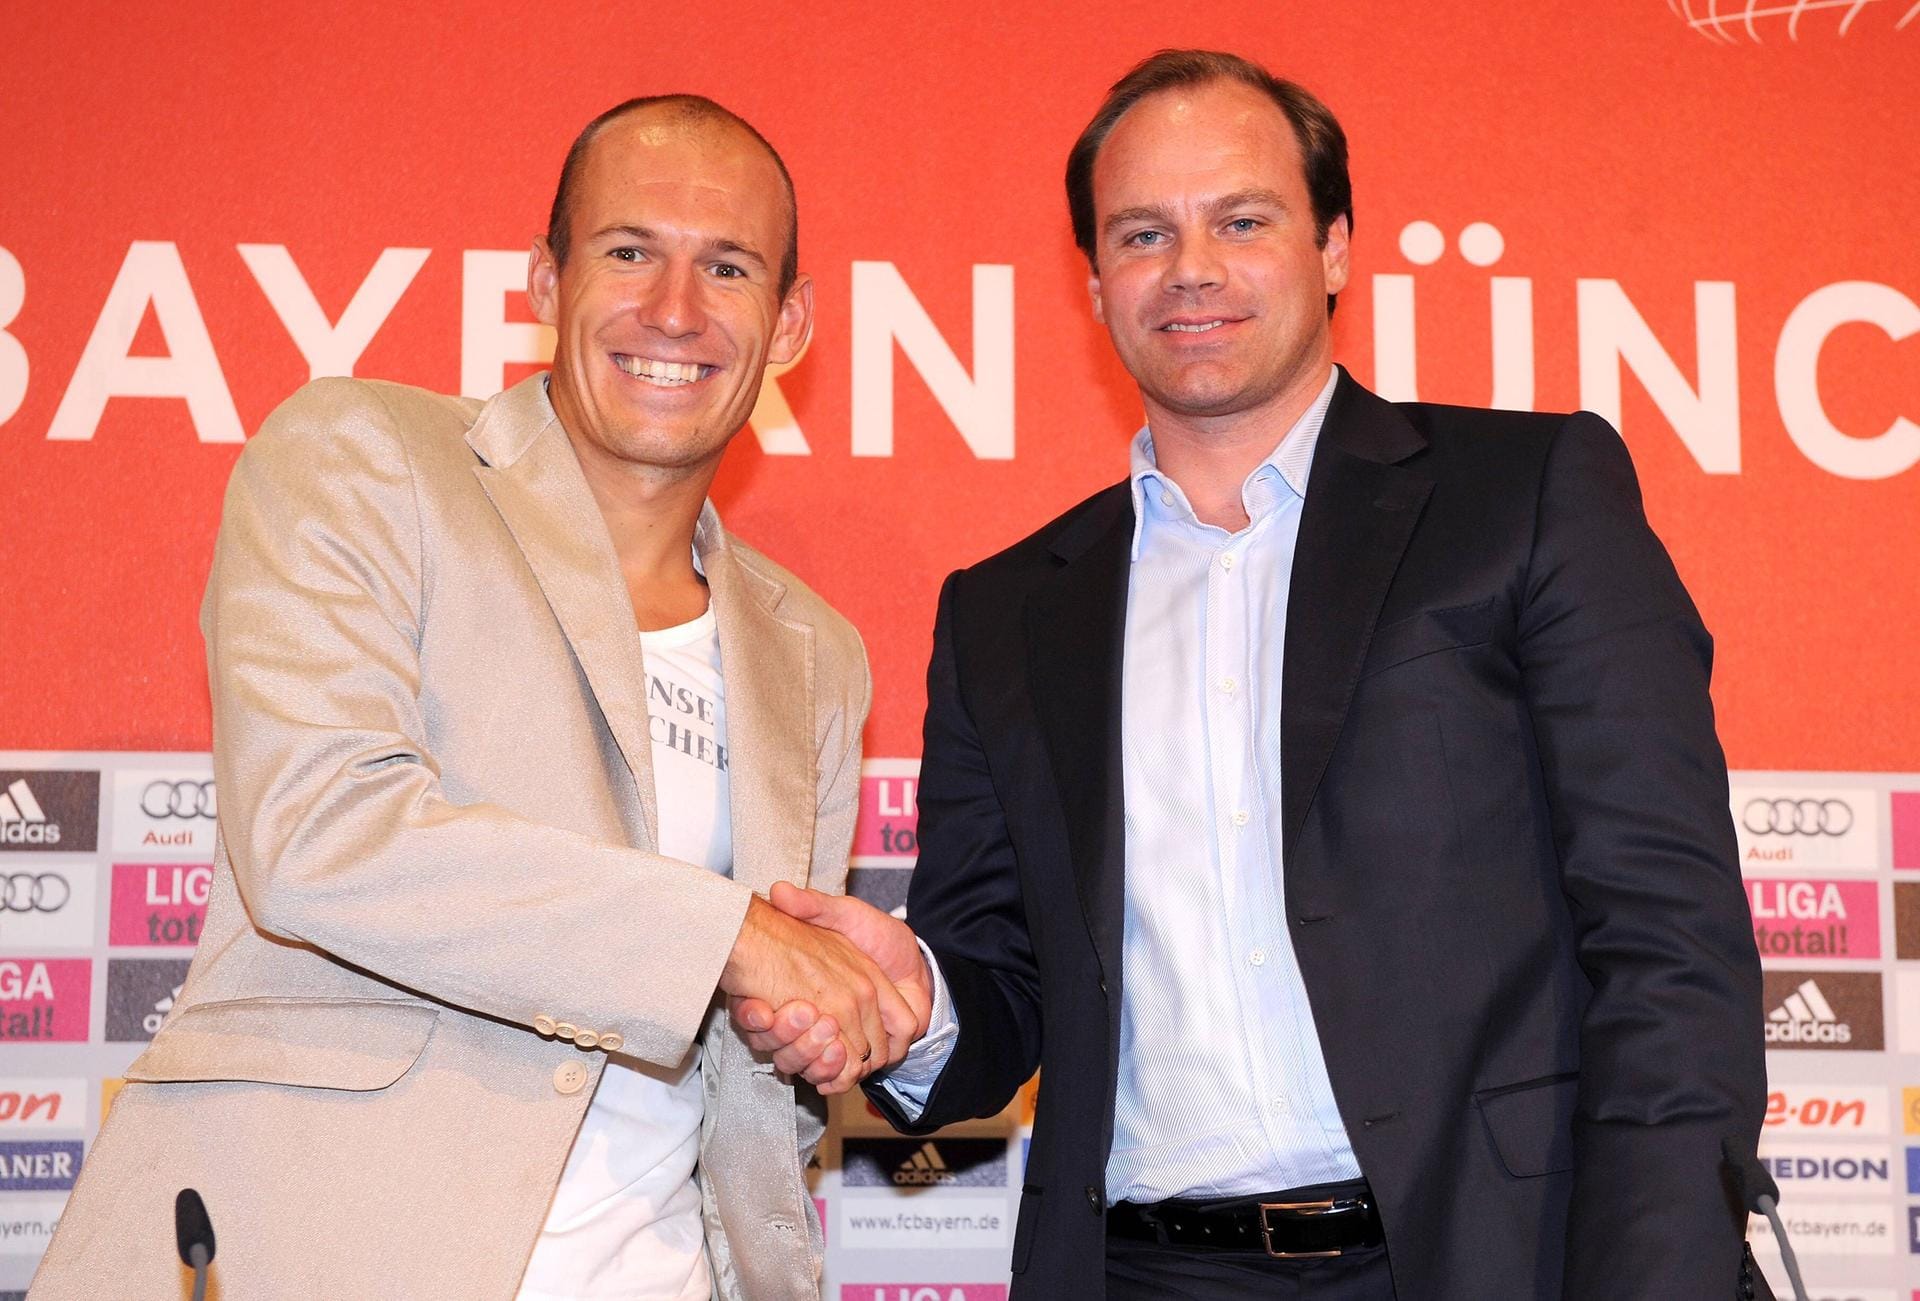 Arjen Robben (links): Transferdatum: 28. August 2009. Ablöse: 25 Millionen Euro. Abgebender Verein: Real Madrid.